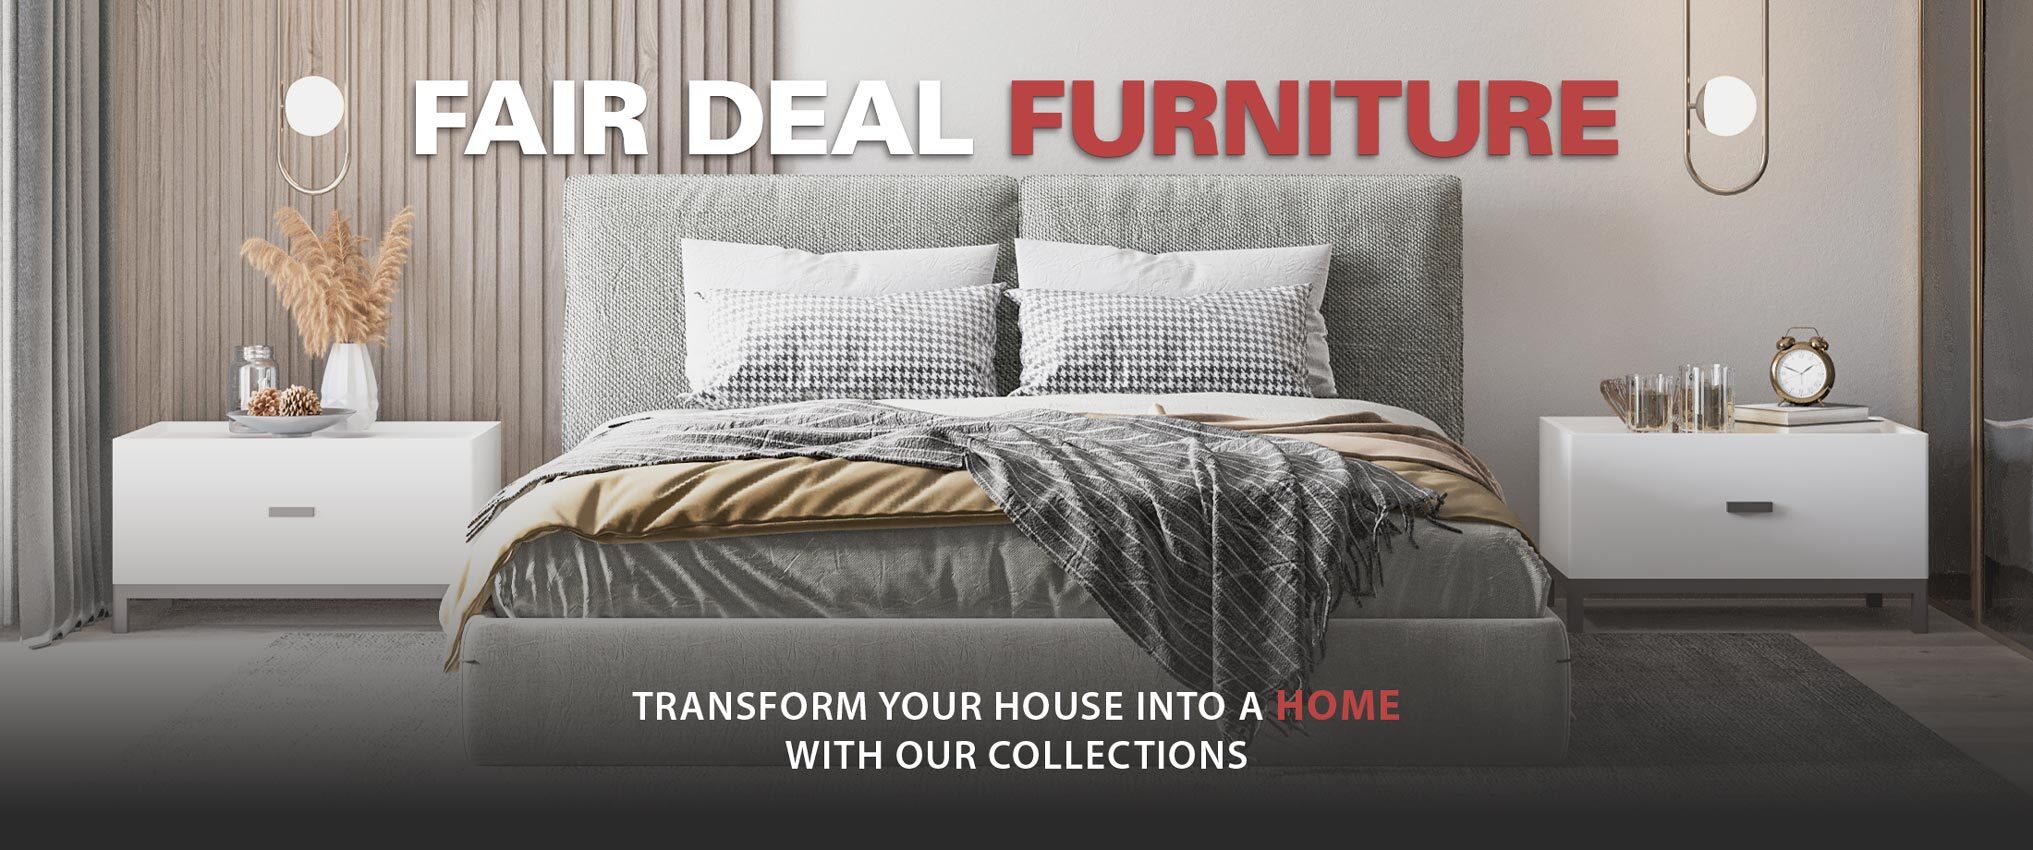 Fair Deal Furniture transform your house into a home